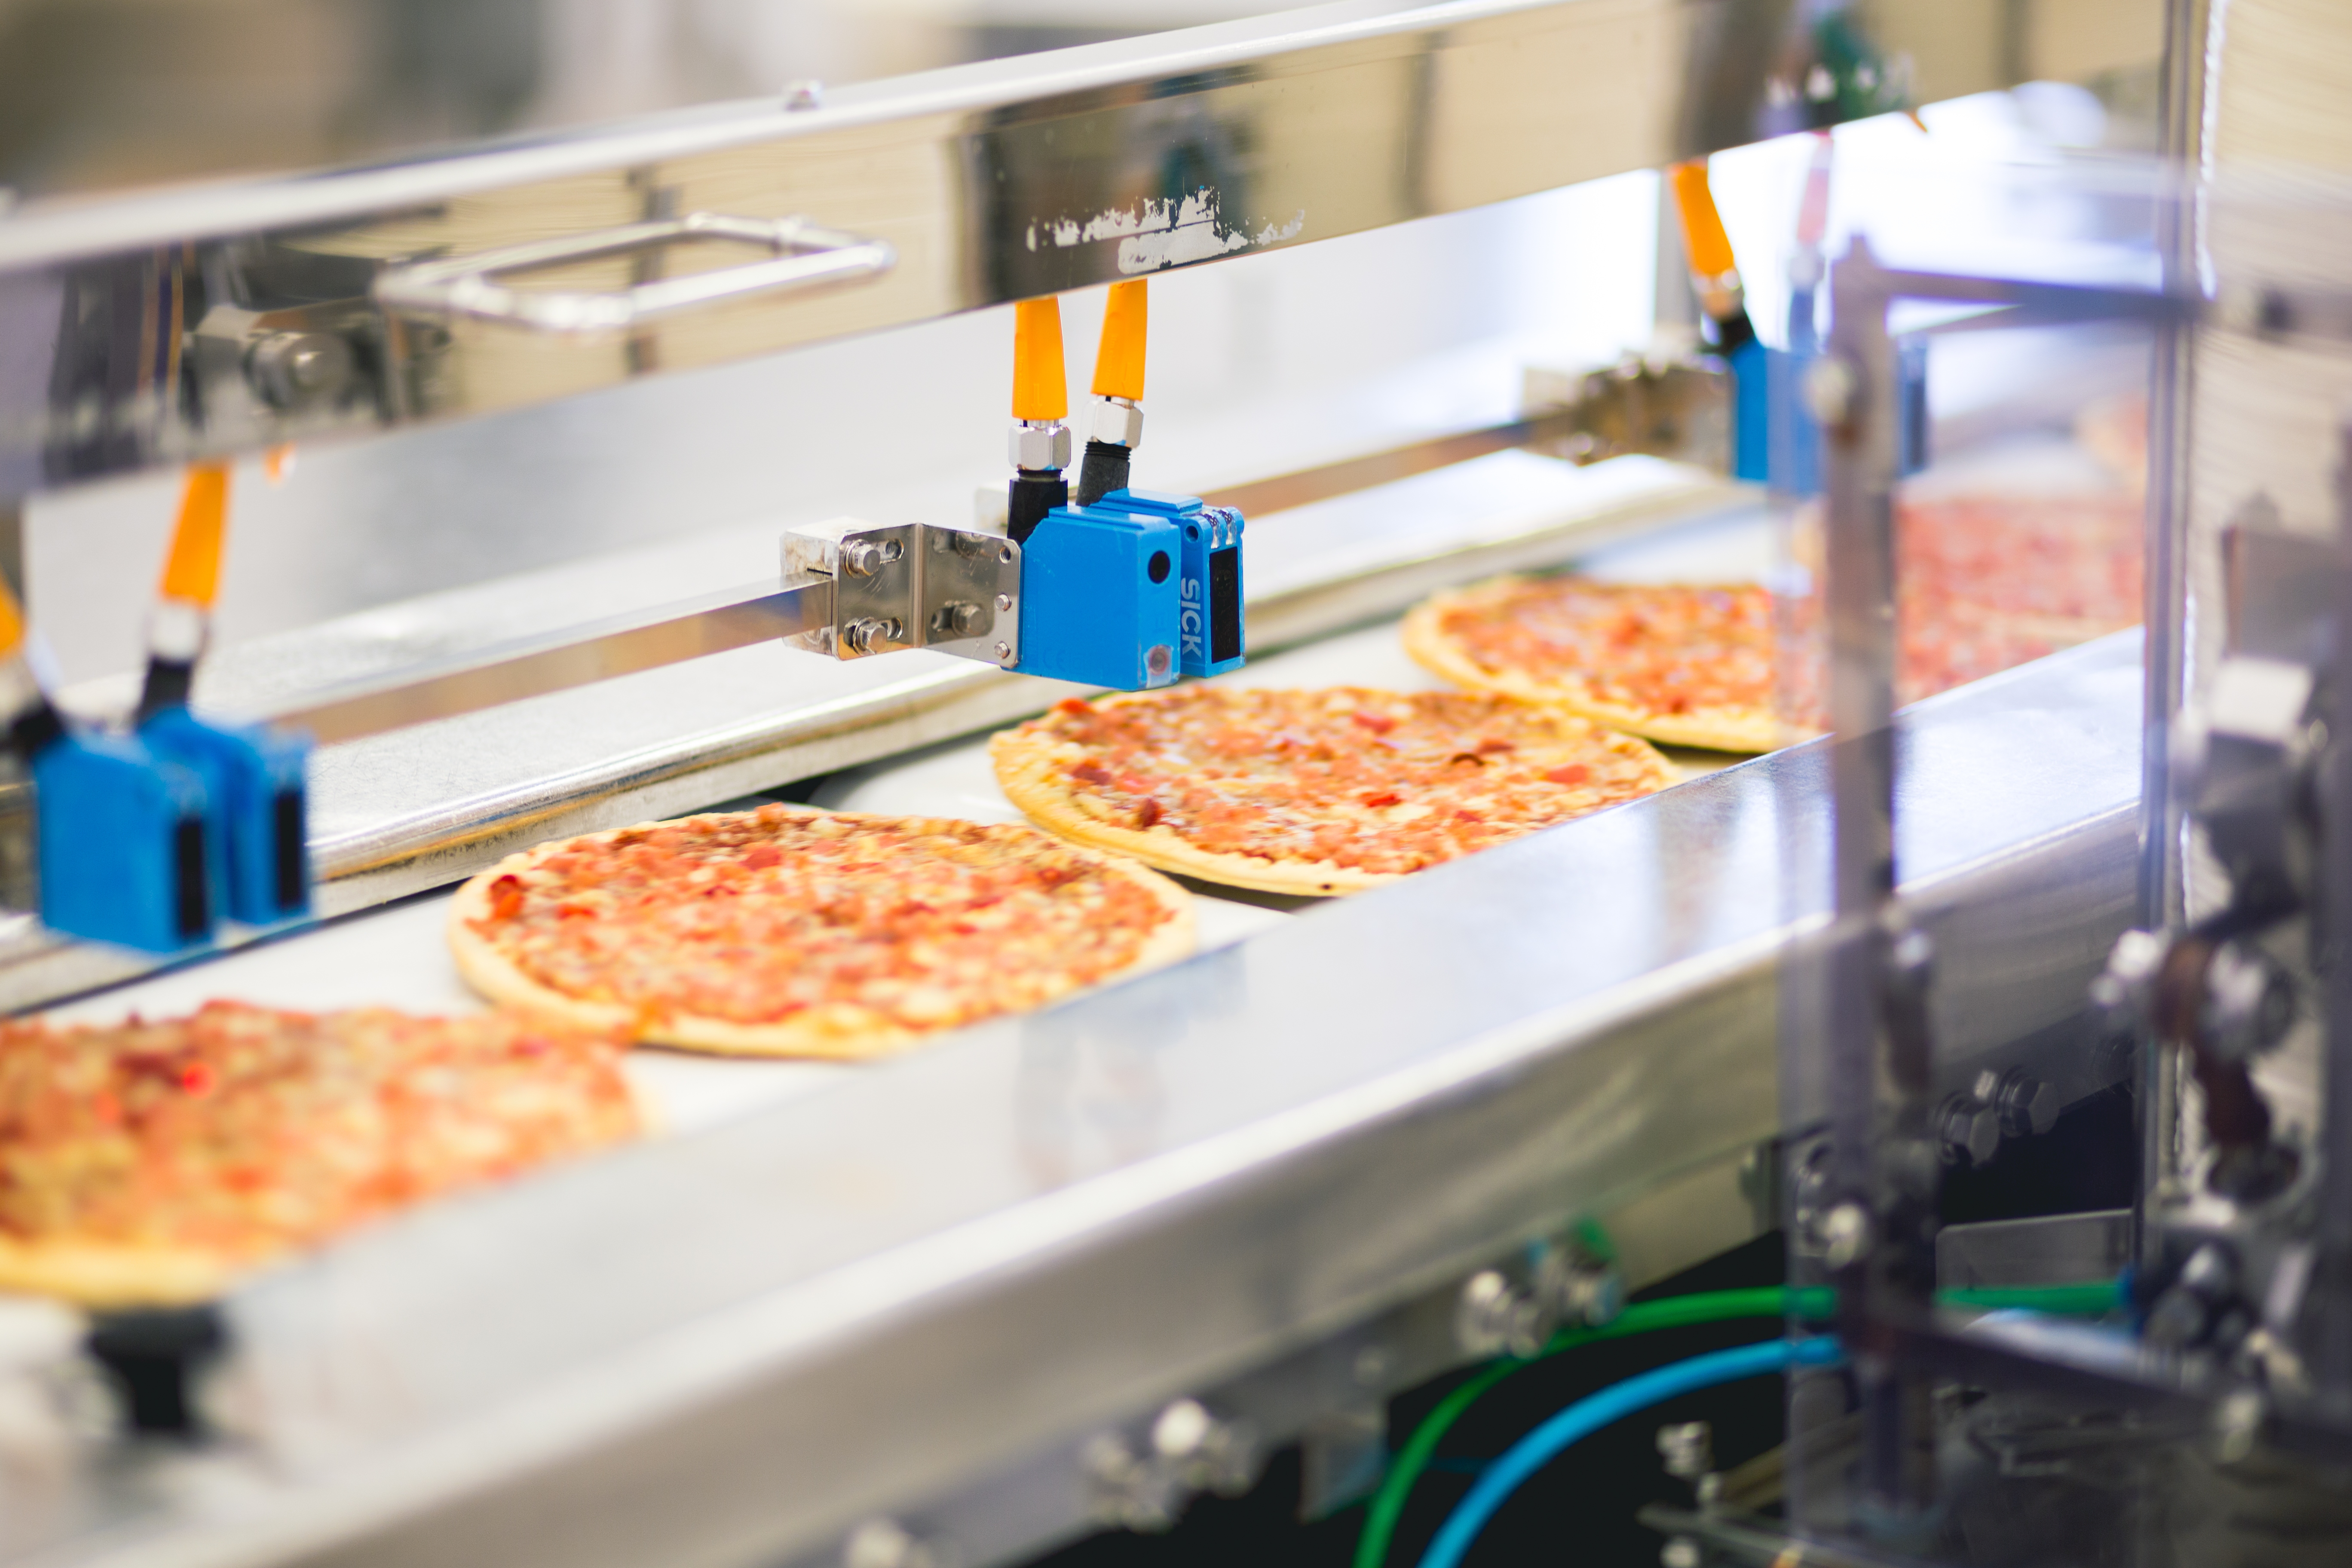 photos of pizzas on a food processing conveyor belt